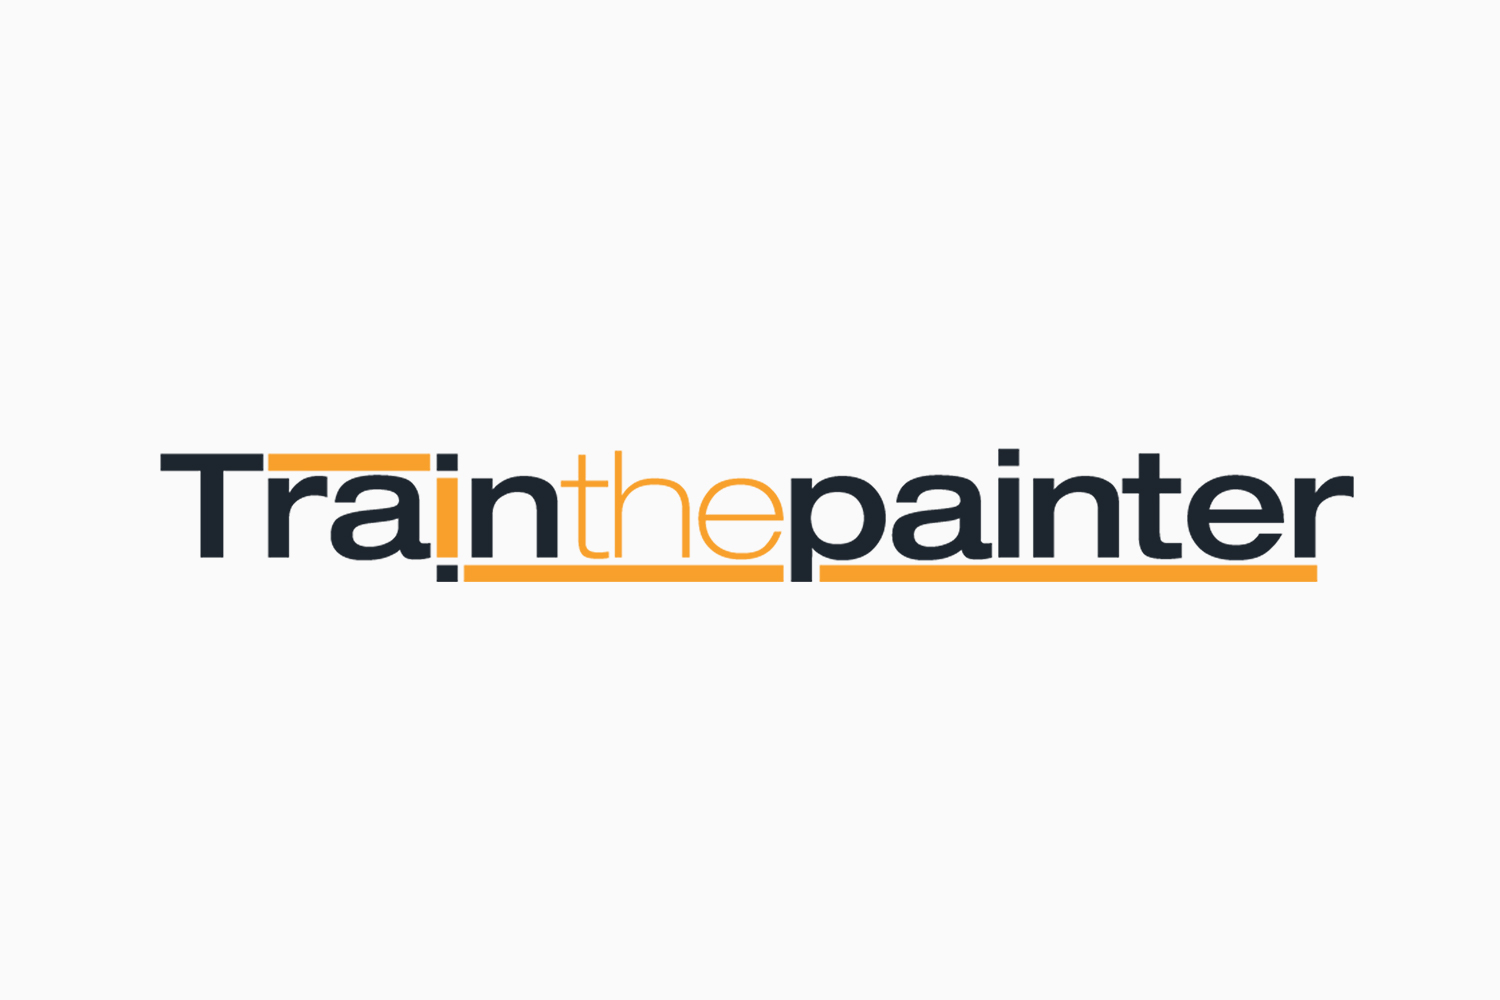 Train the painter logo